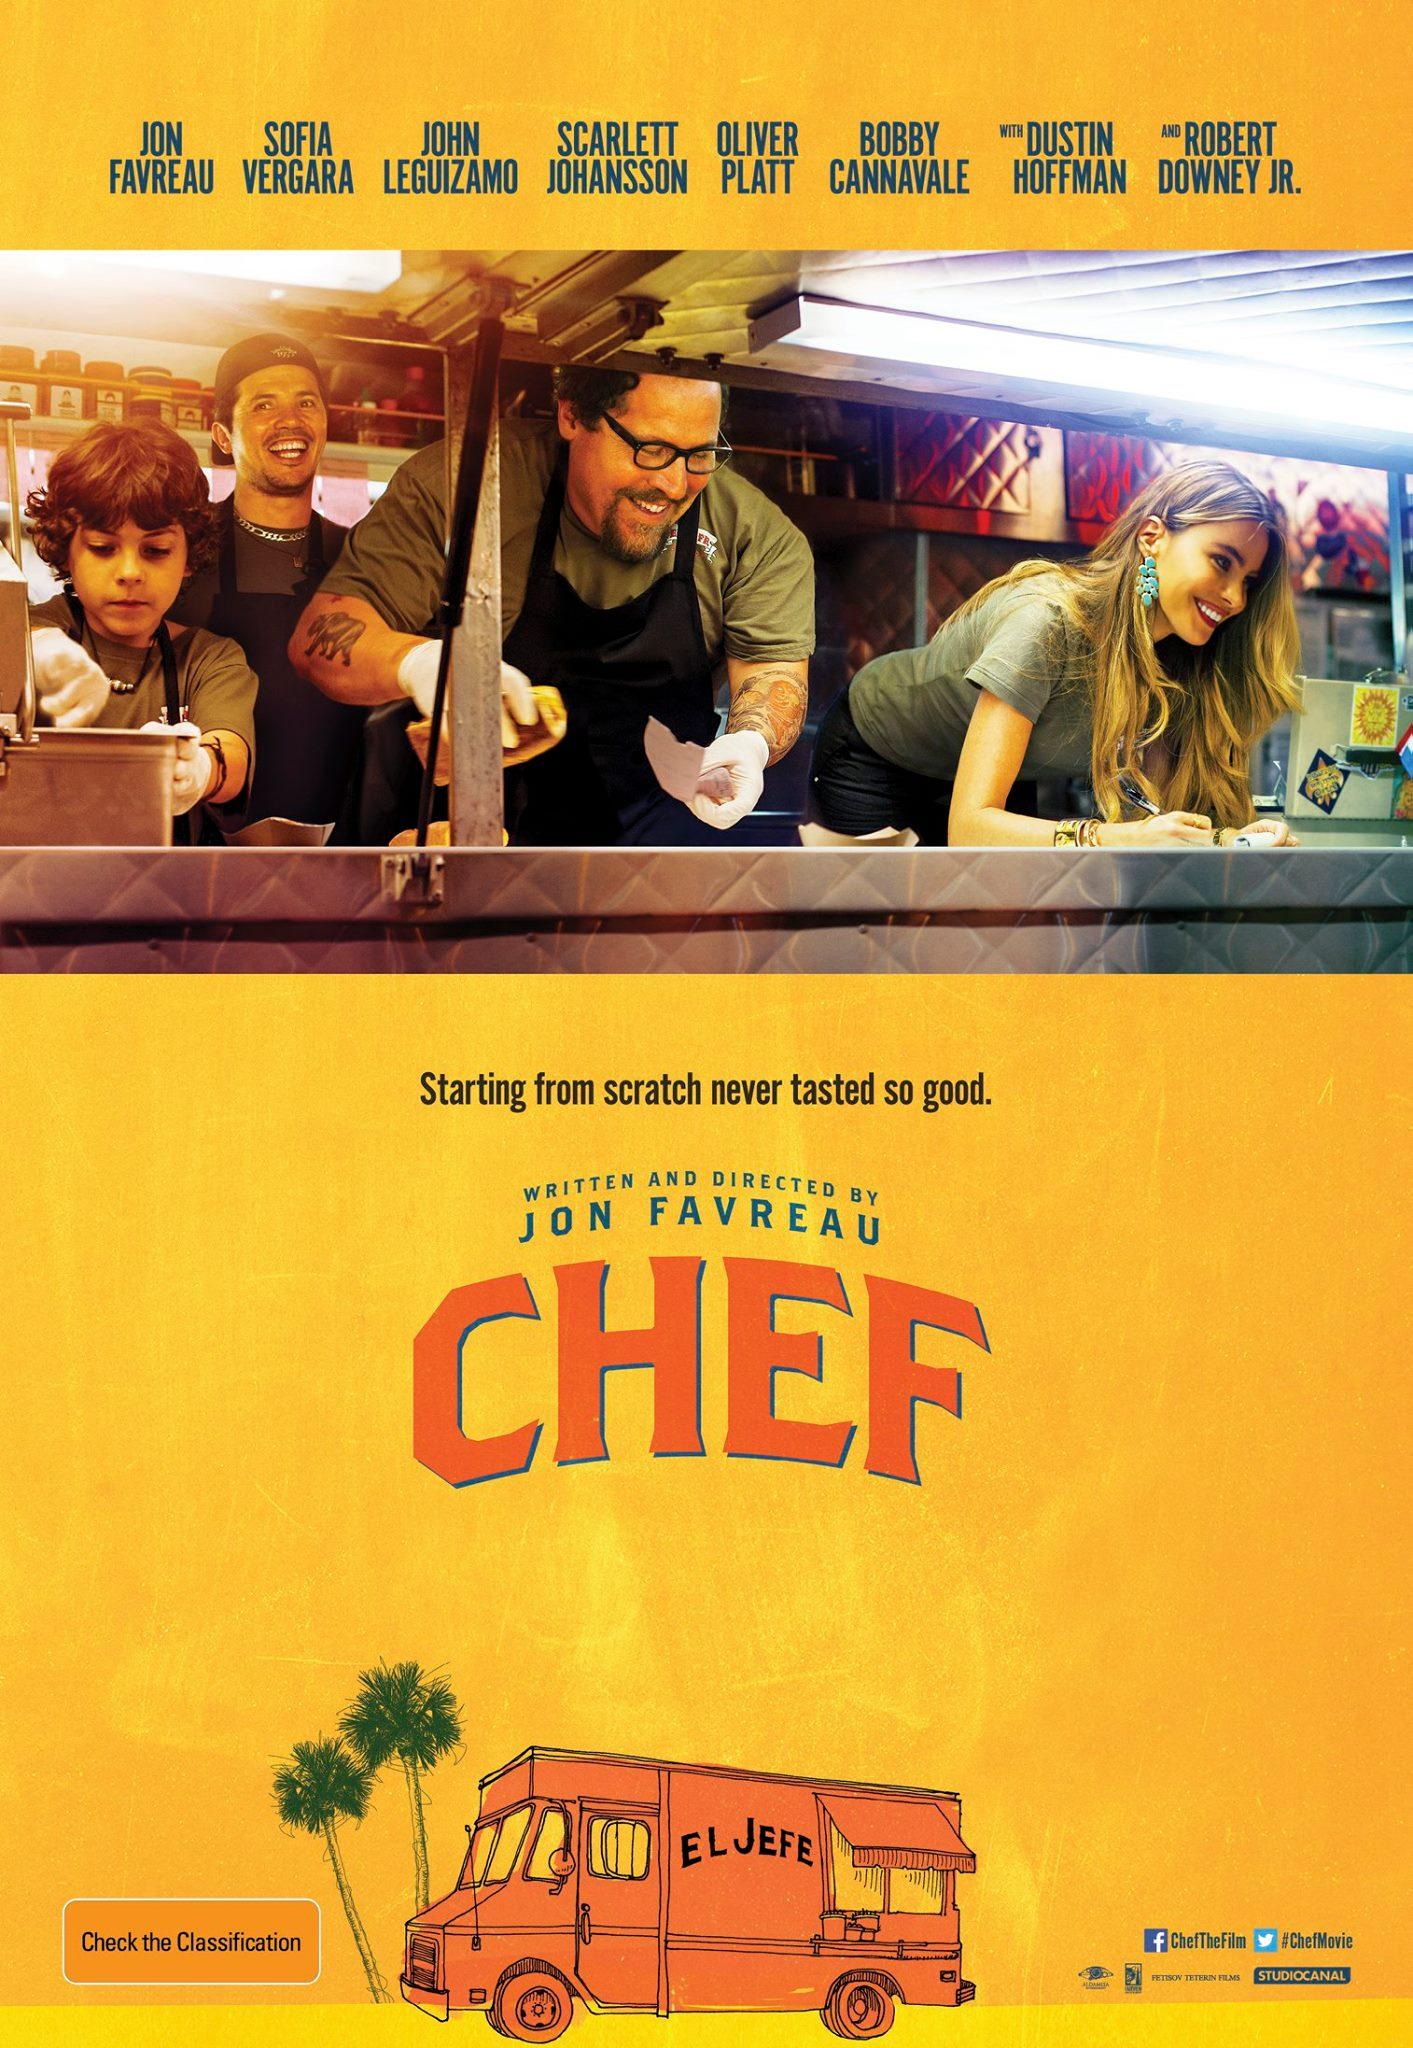 Постер фильма Повар на колёсах | Chef